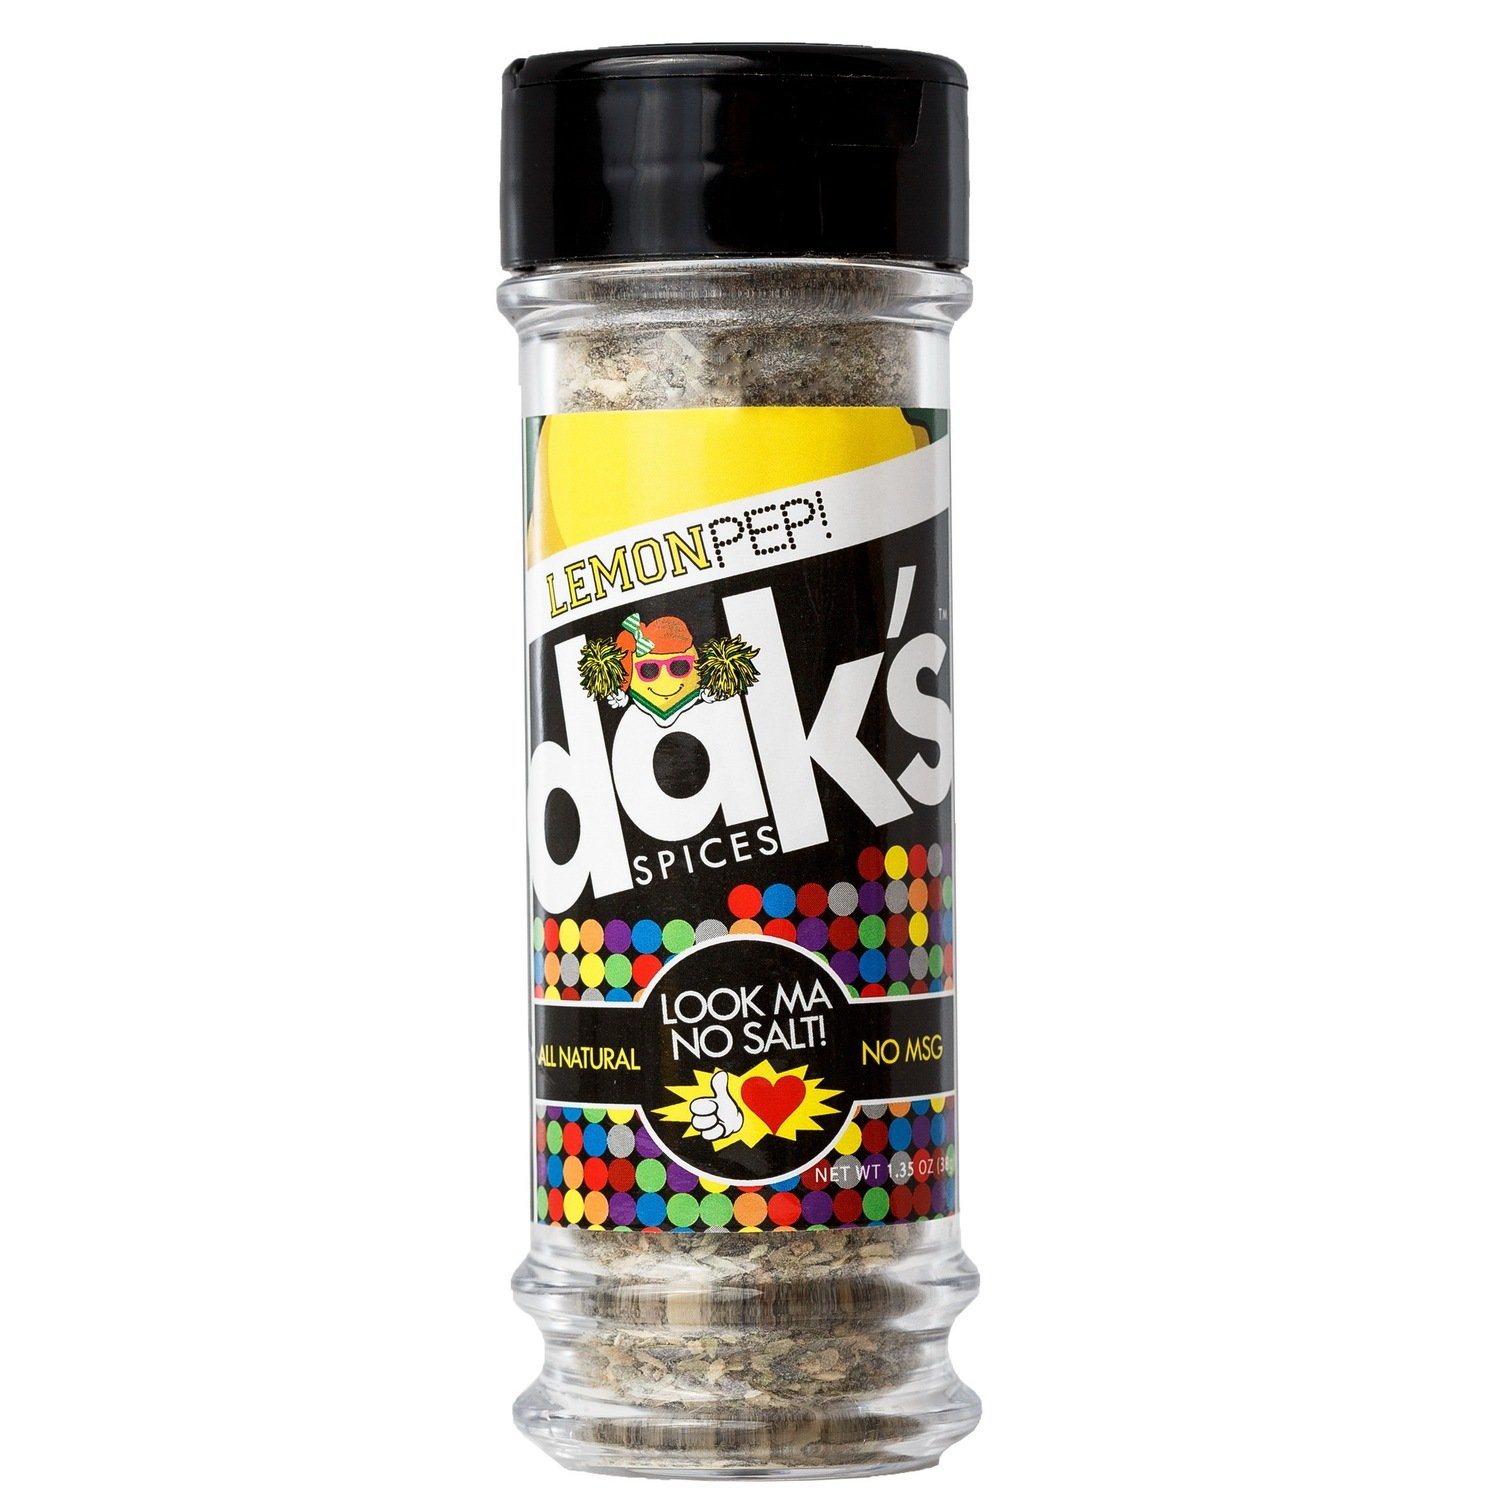 DAK'S LEMON PEP - SALT FREE seasoning to enhance any meal